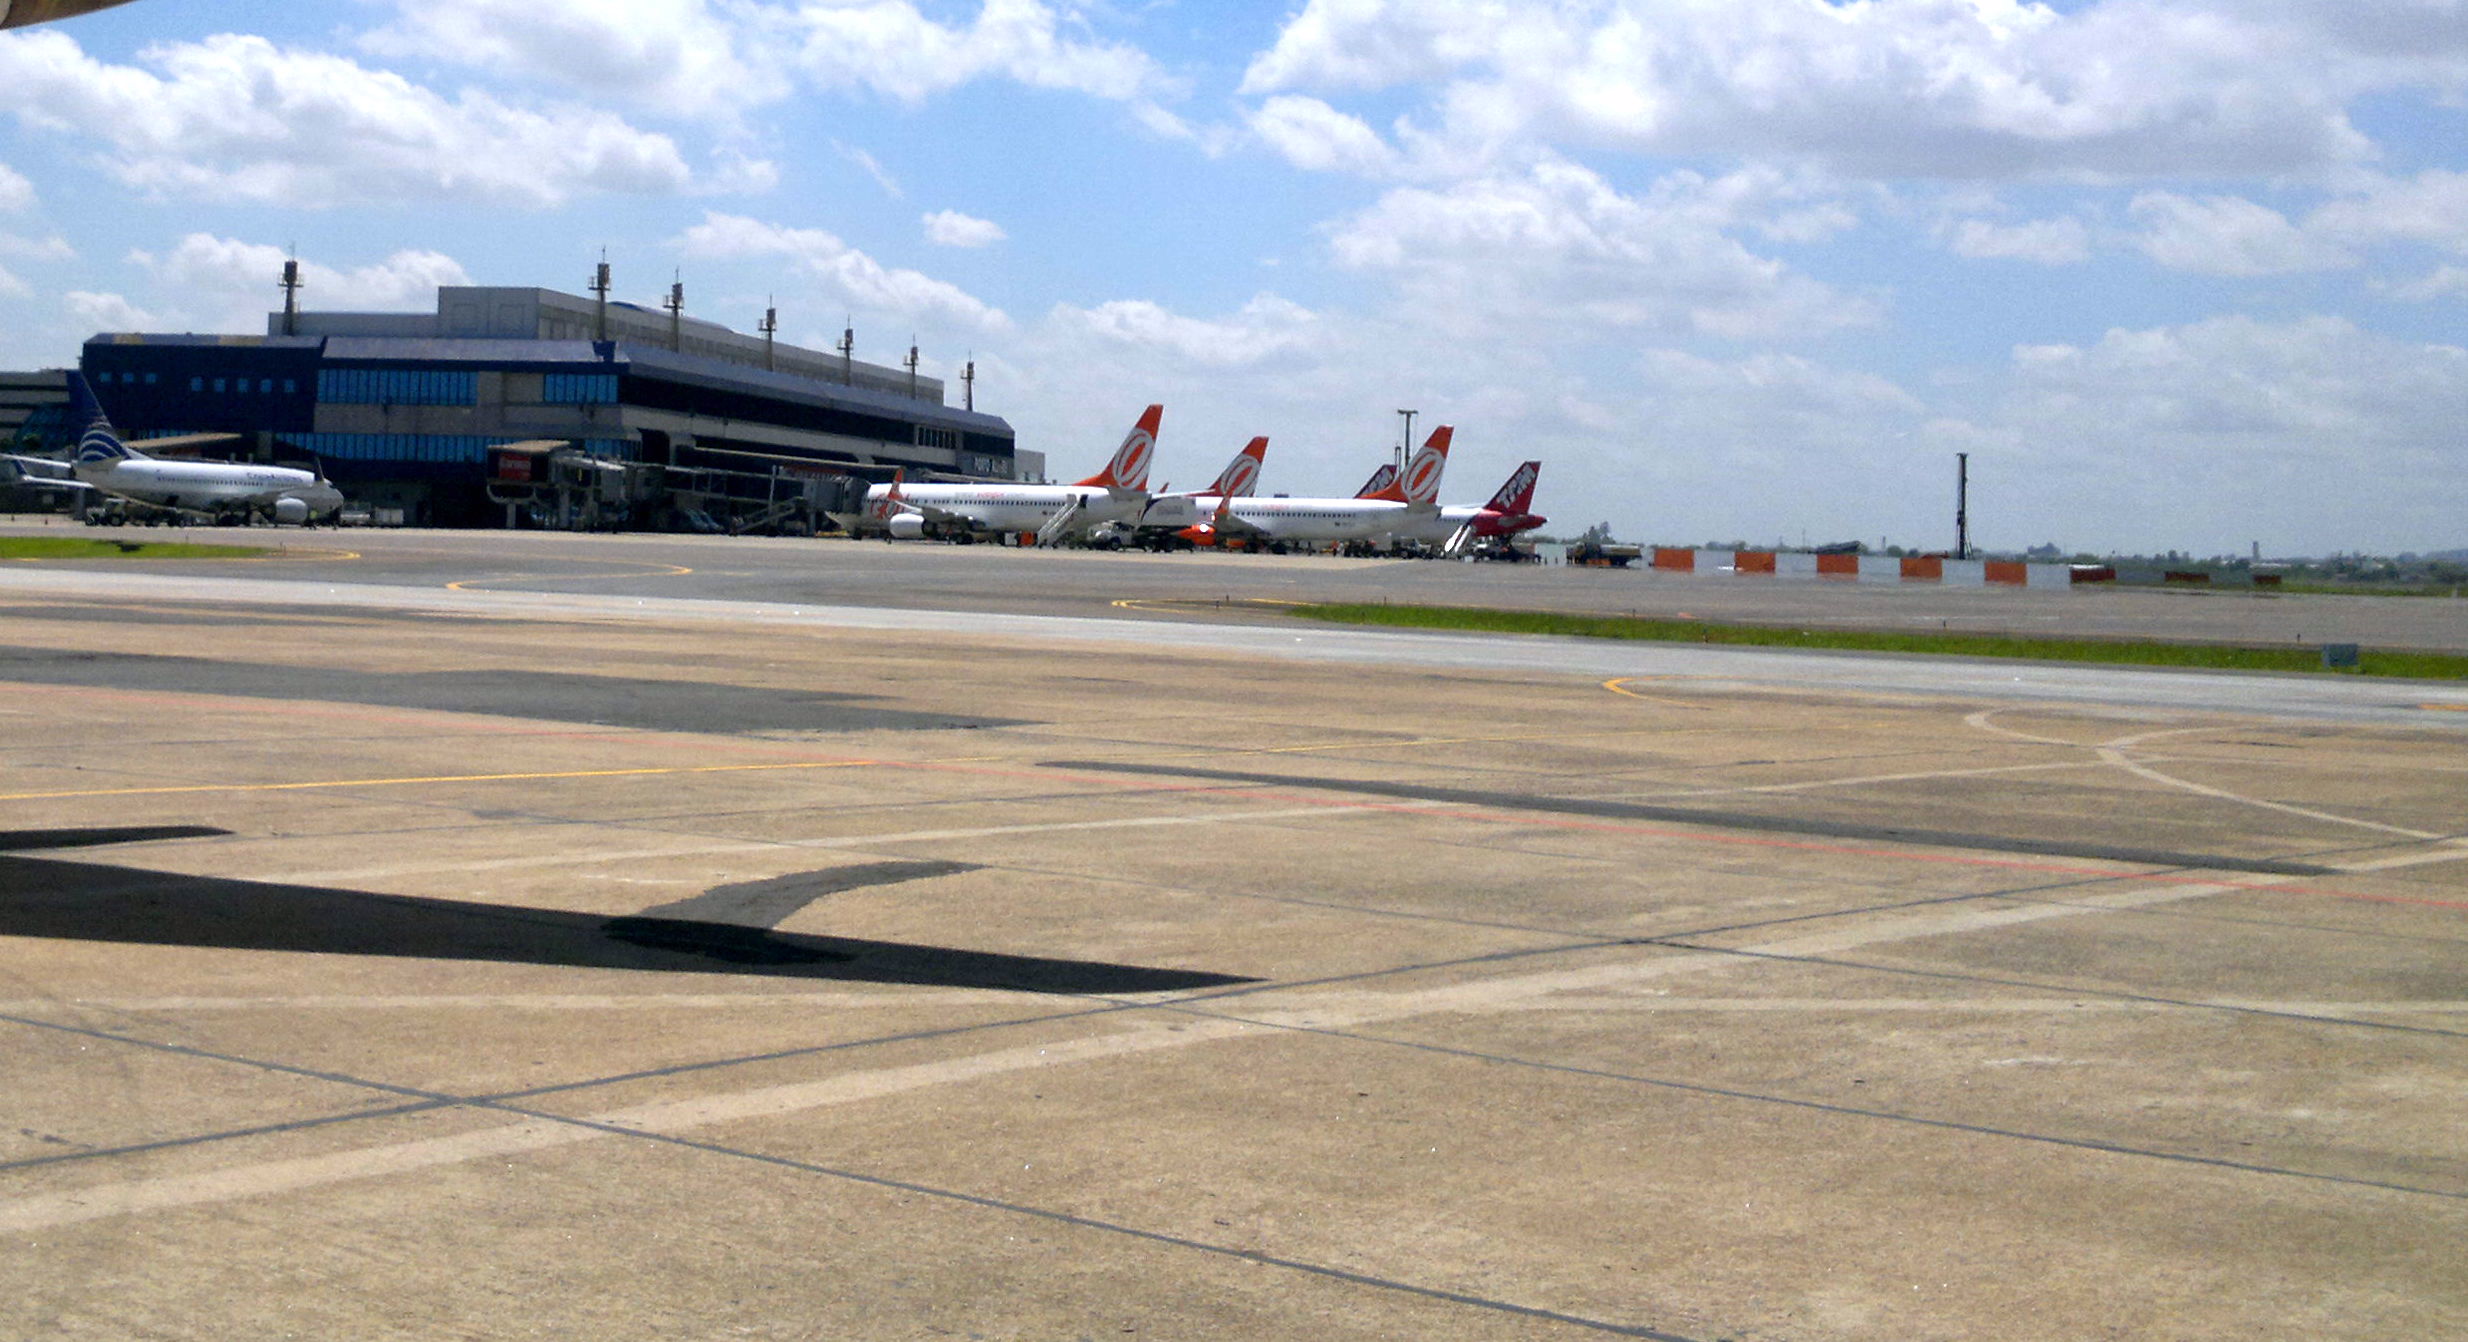 Aeroporto de Porto Velho inaugura o sistema ELO - Flap International